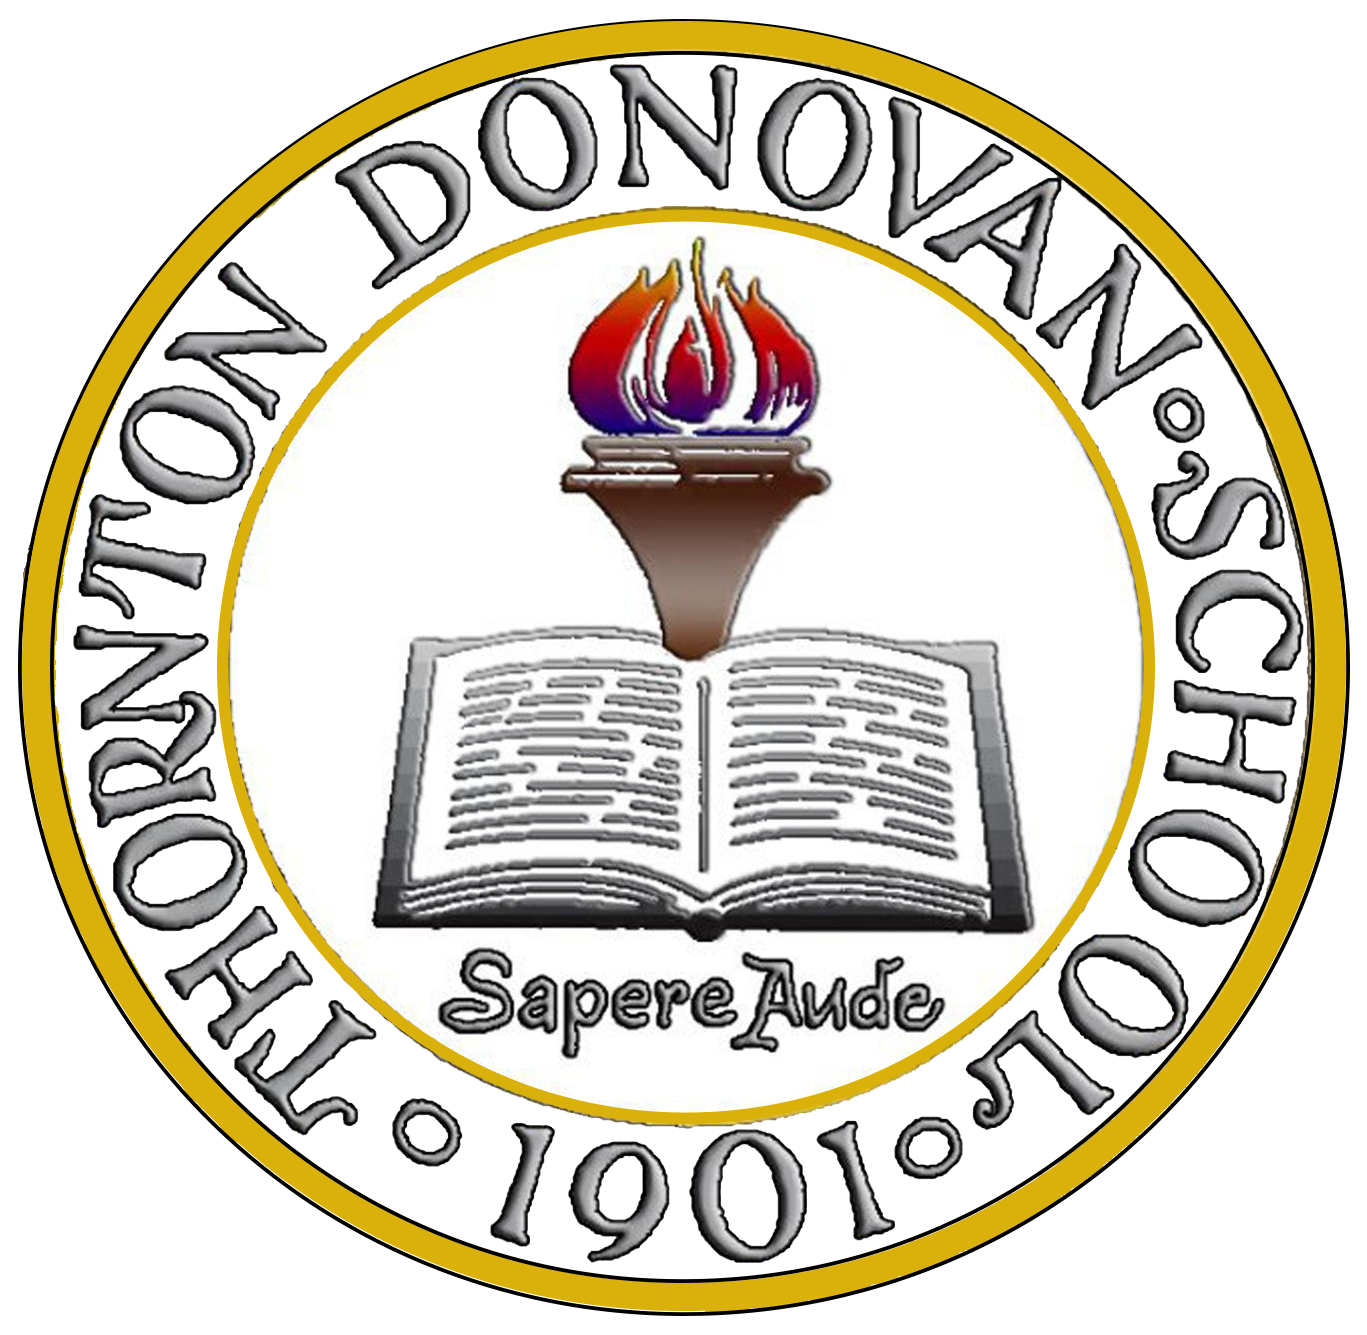 Thornton-Donovan School